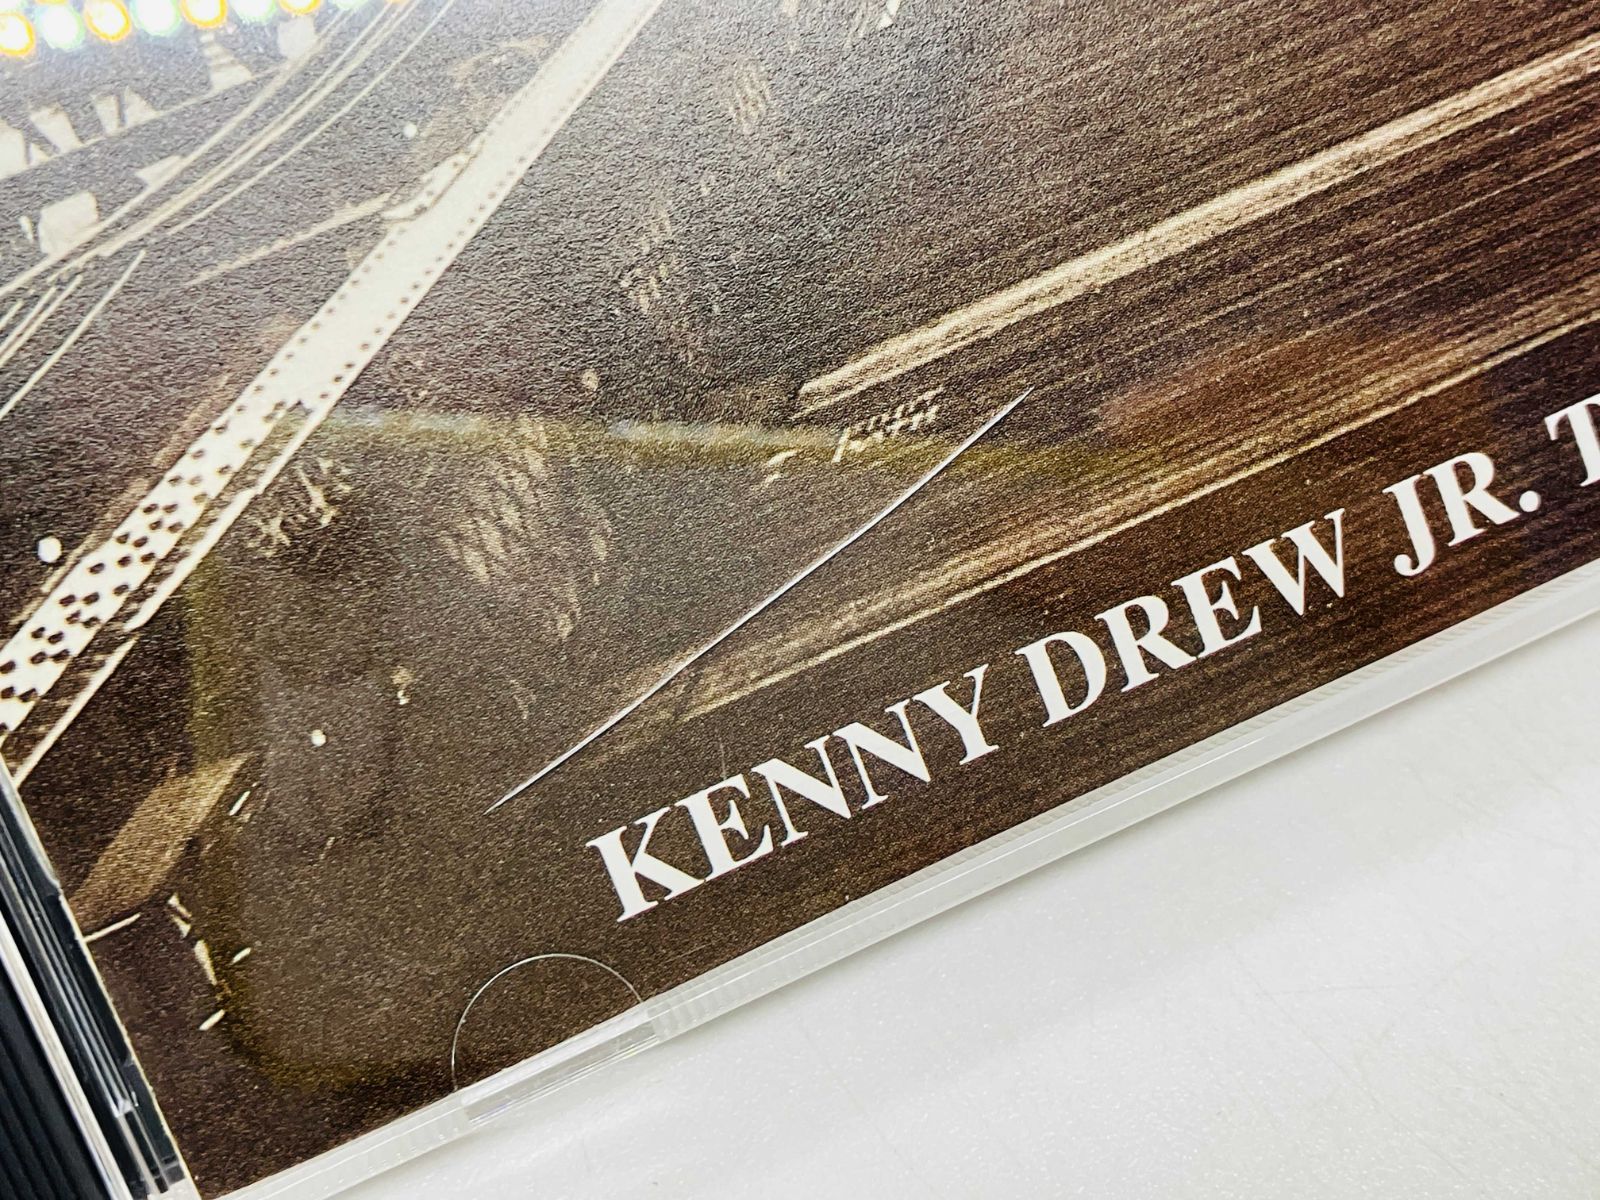 CD KENNY DREW JR. TRIO / SICILIANO / ケニー・ドリュー・Jr.トリオ シシリアーノ 帯付き 2000円盤  MECJ-2009 Q01 - メルカリ